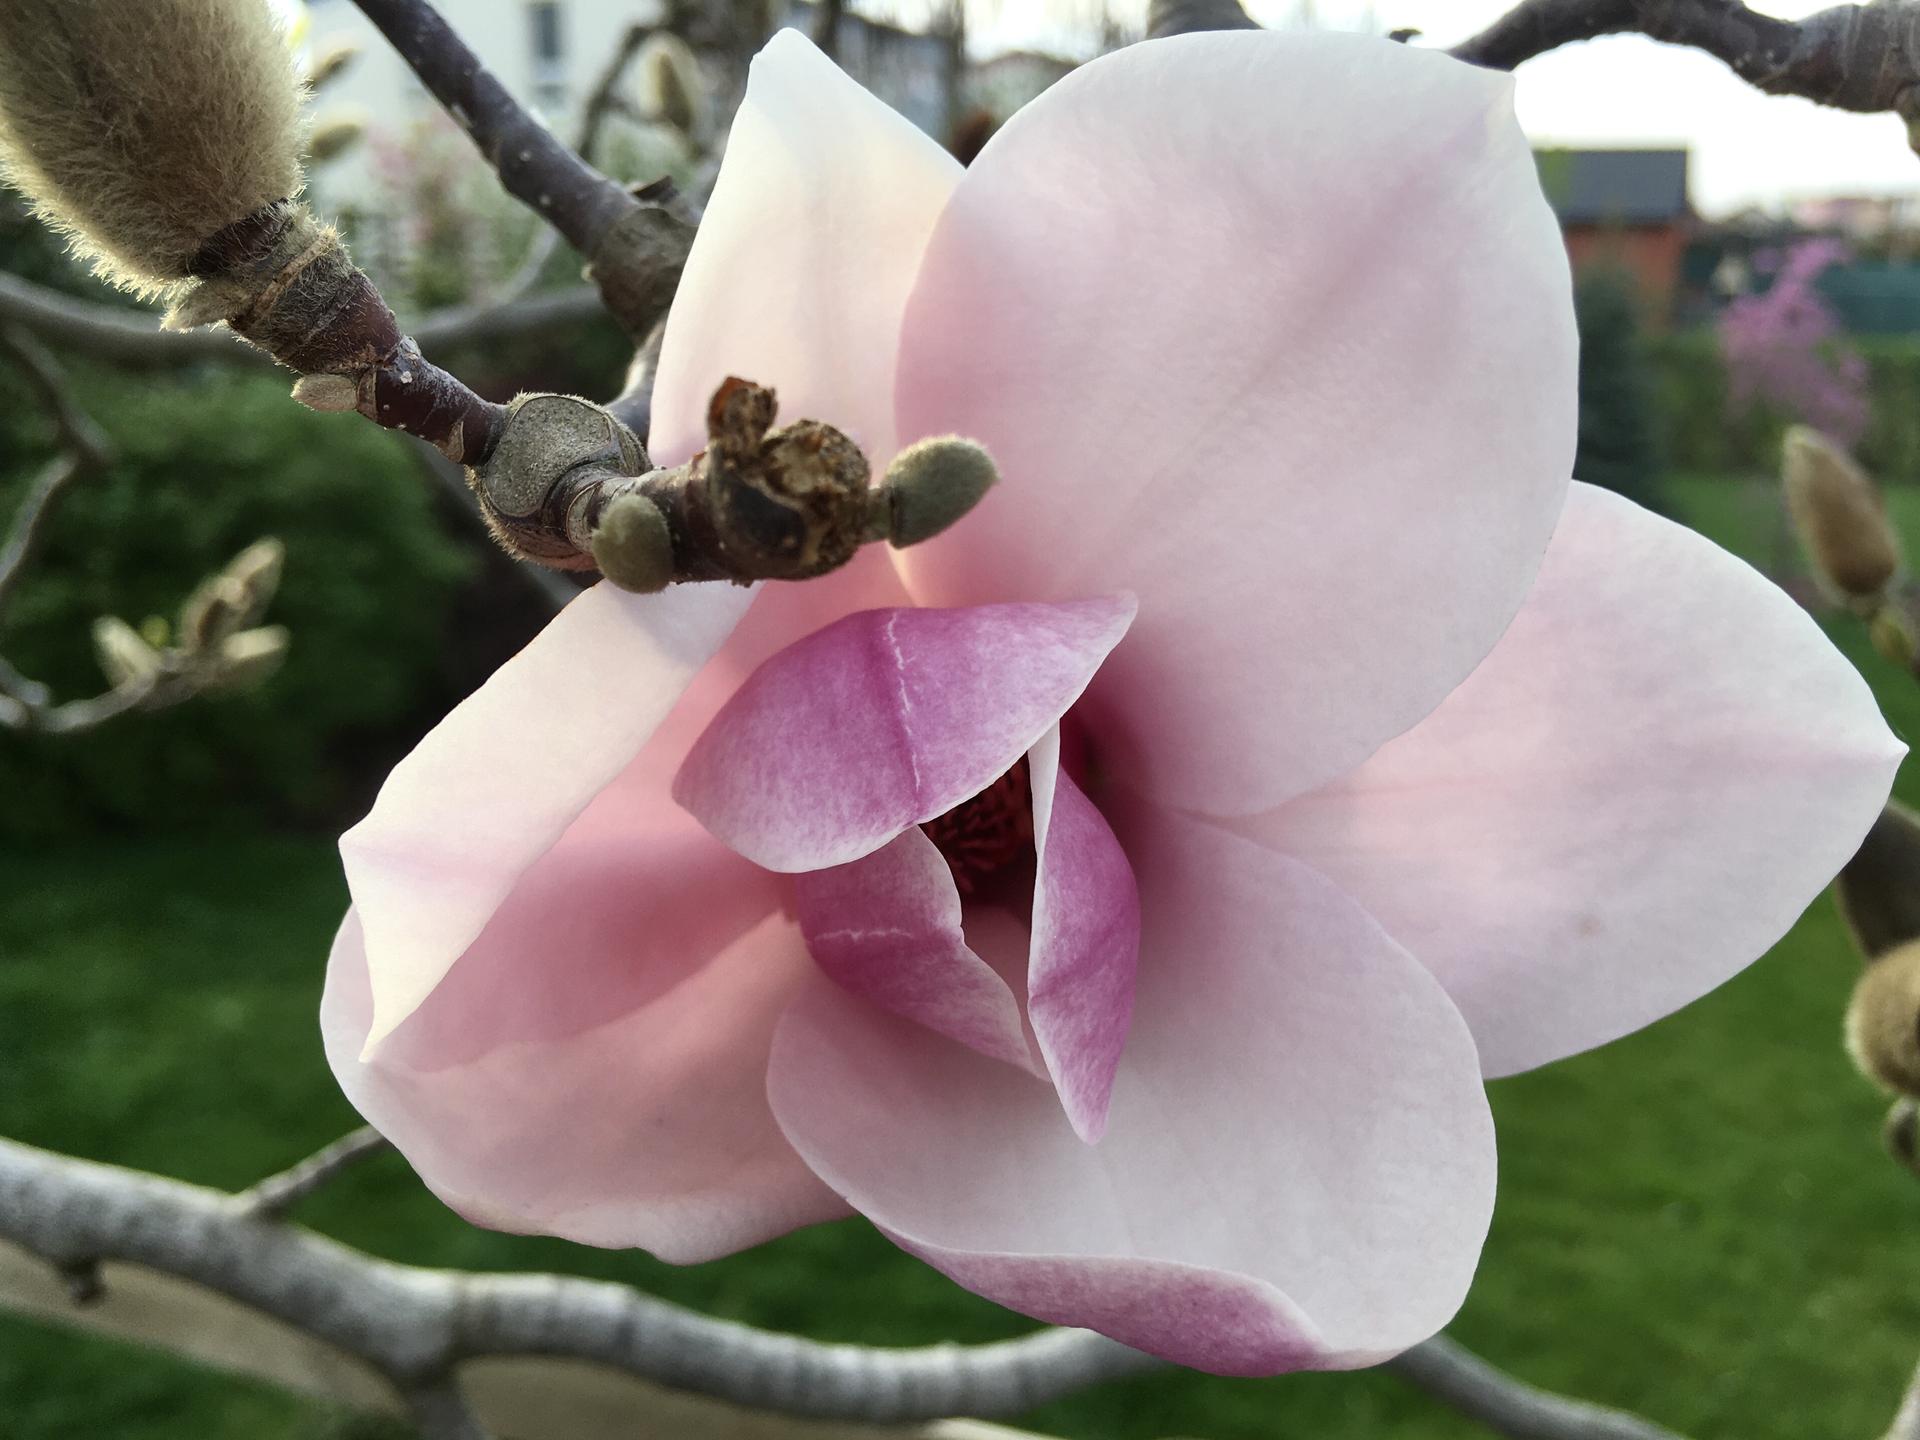 Zahrada 2020 - At zije jeden kvet na ctyrmetrove magnolii... mraz mel mnohonasobne vyssi smrnost nez koronavirus- ze zhruba dvou set poupat prezilo 5. Tak zase za rok, no...